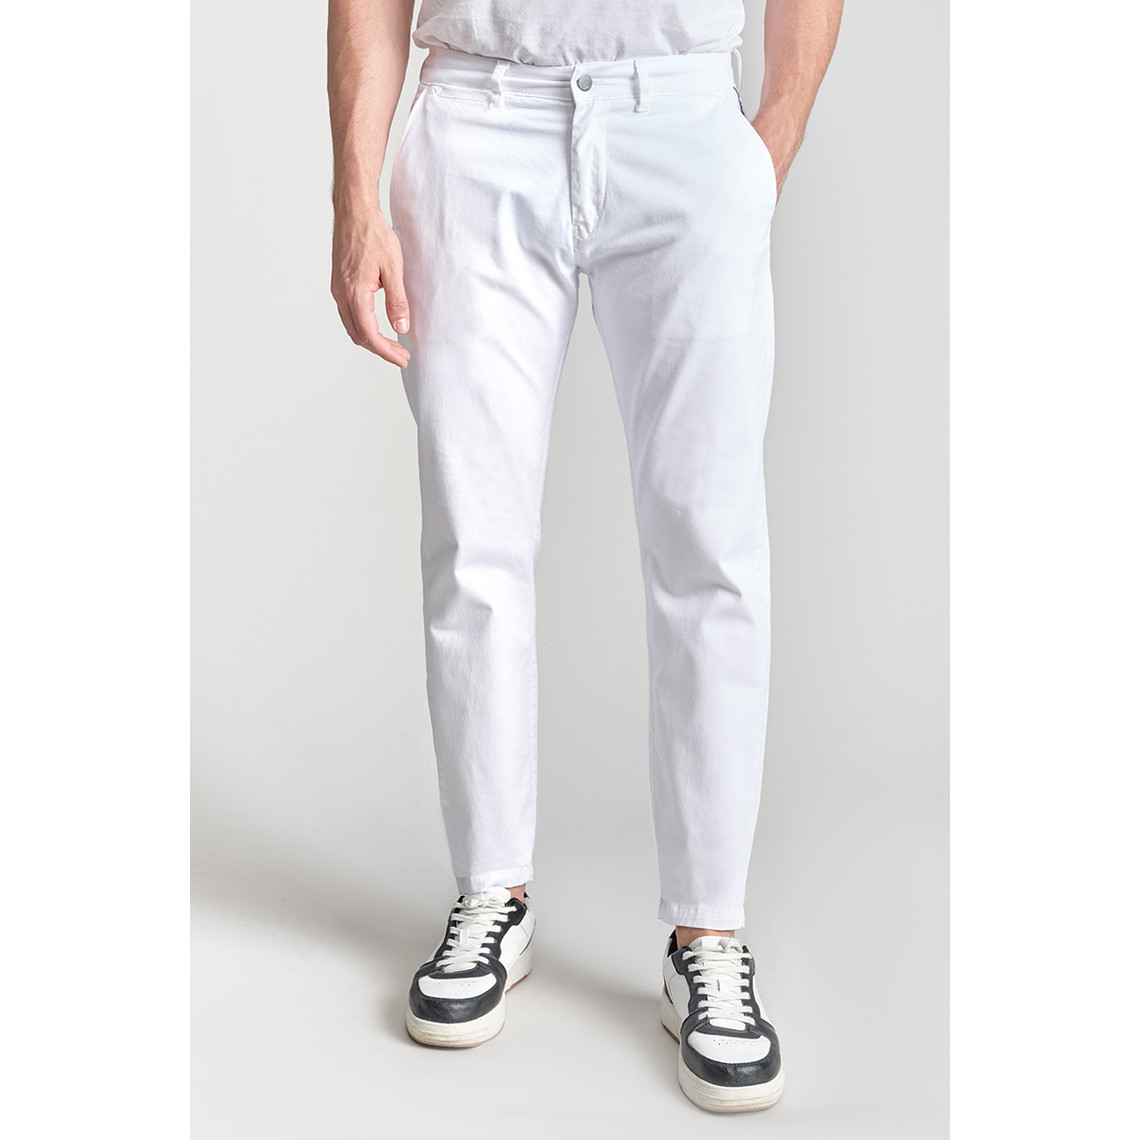 Pantalon chino CESAR blanc